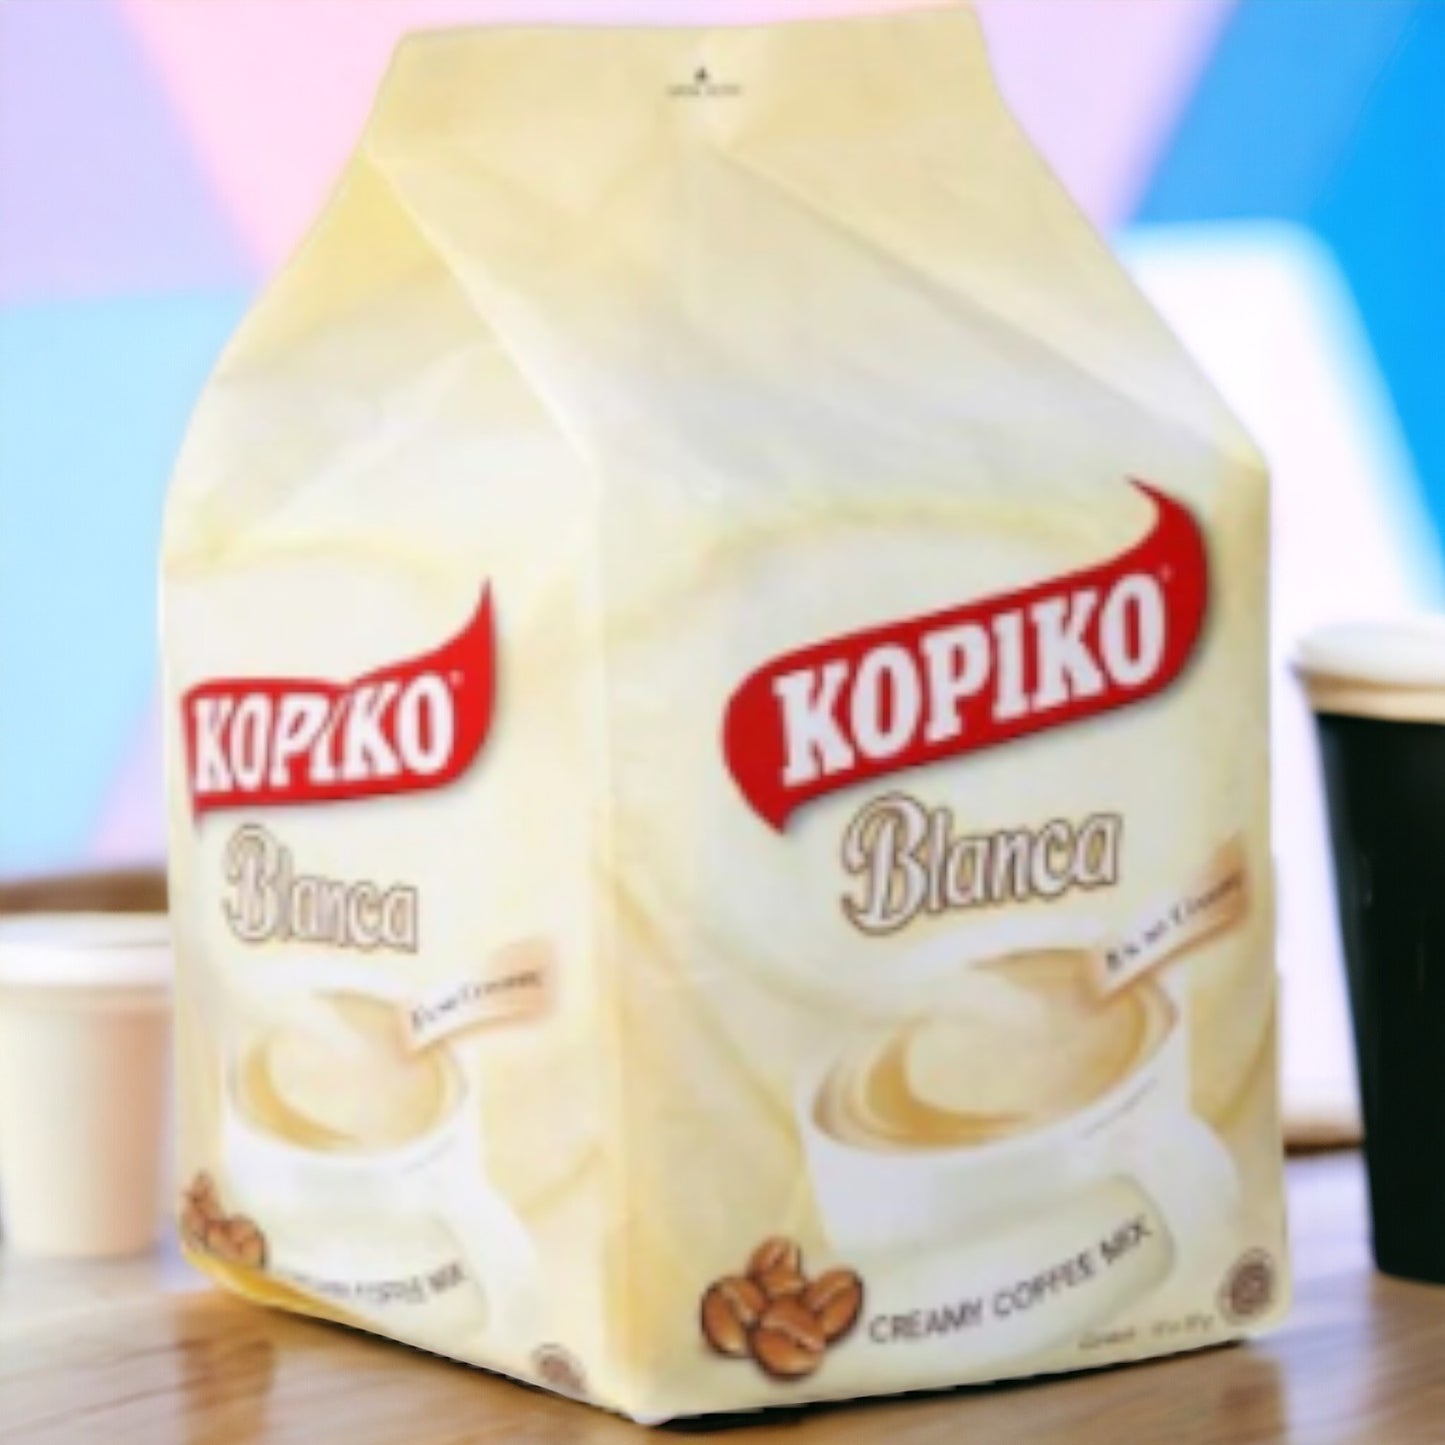 Kopiko Blanca Coffee 10 sachets à 30g